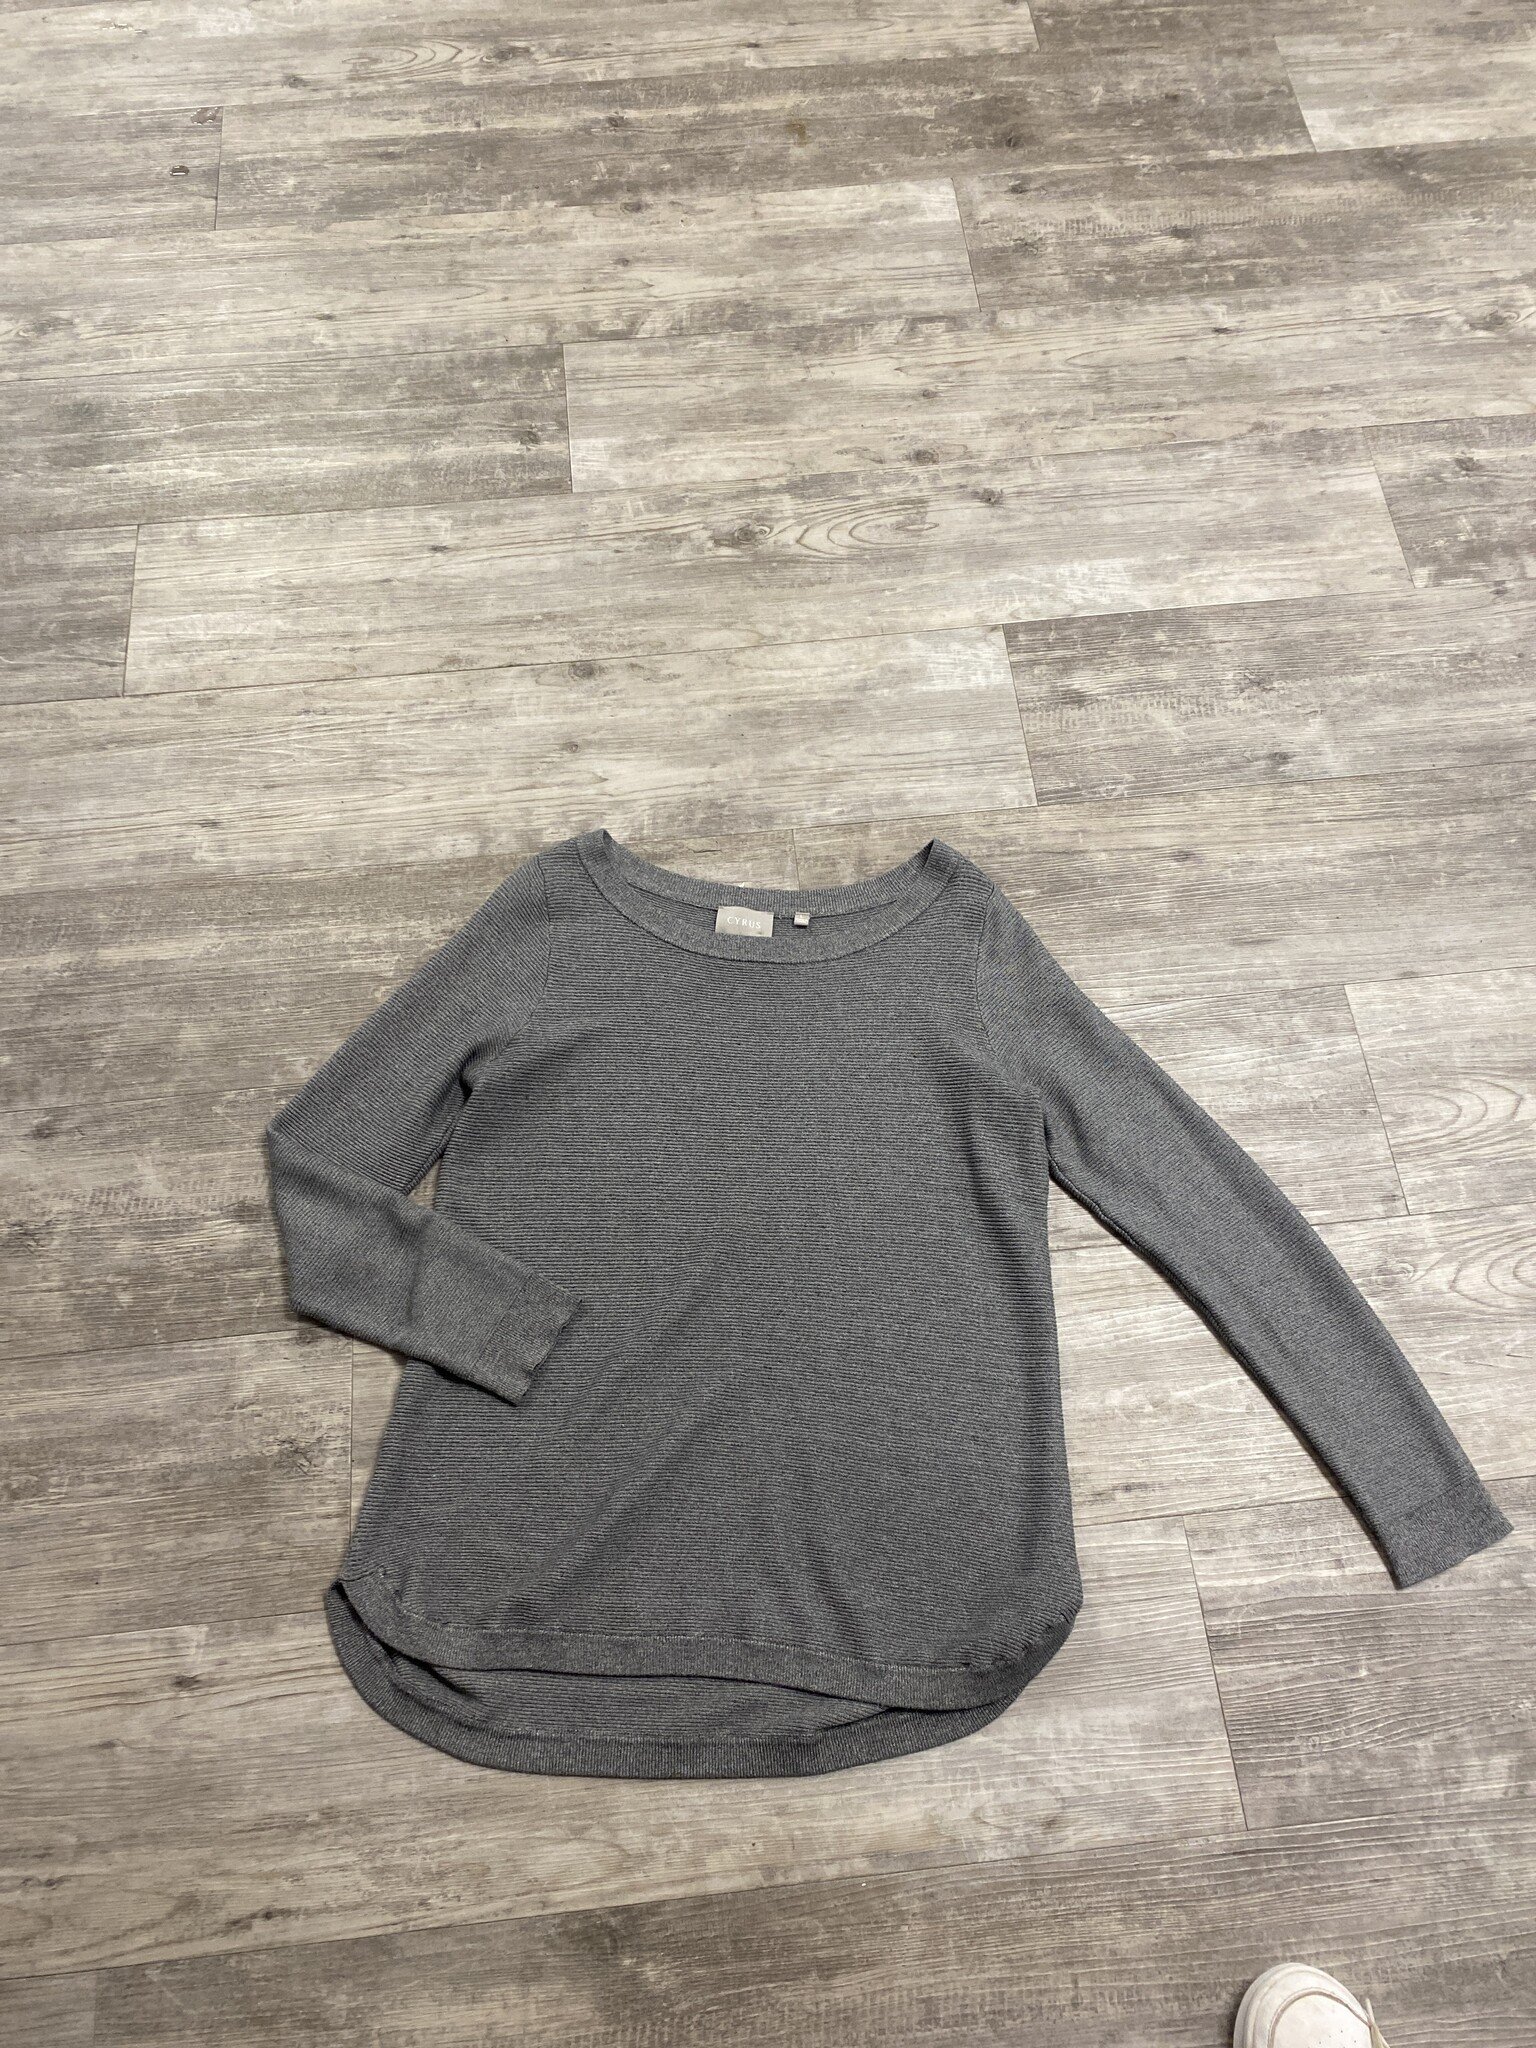 Grey Knit Sweater Size L